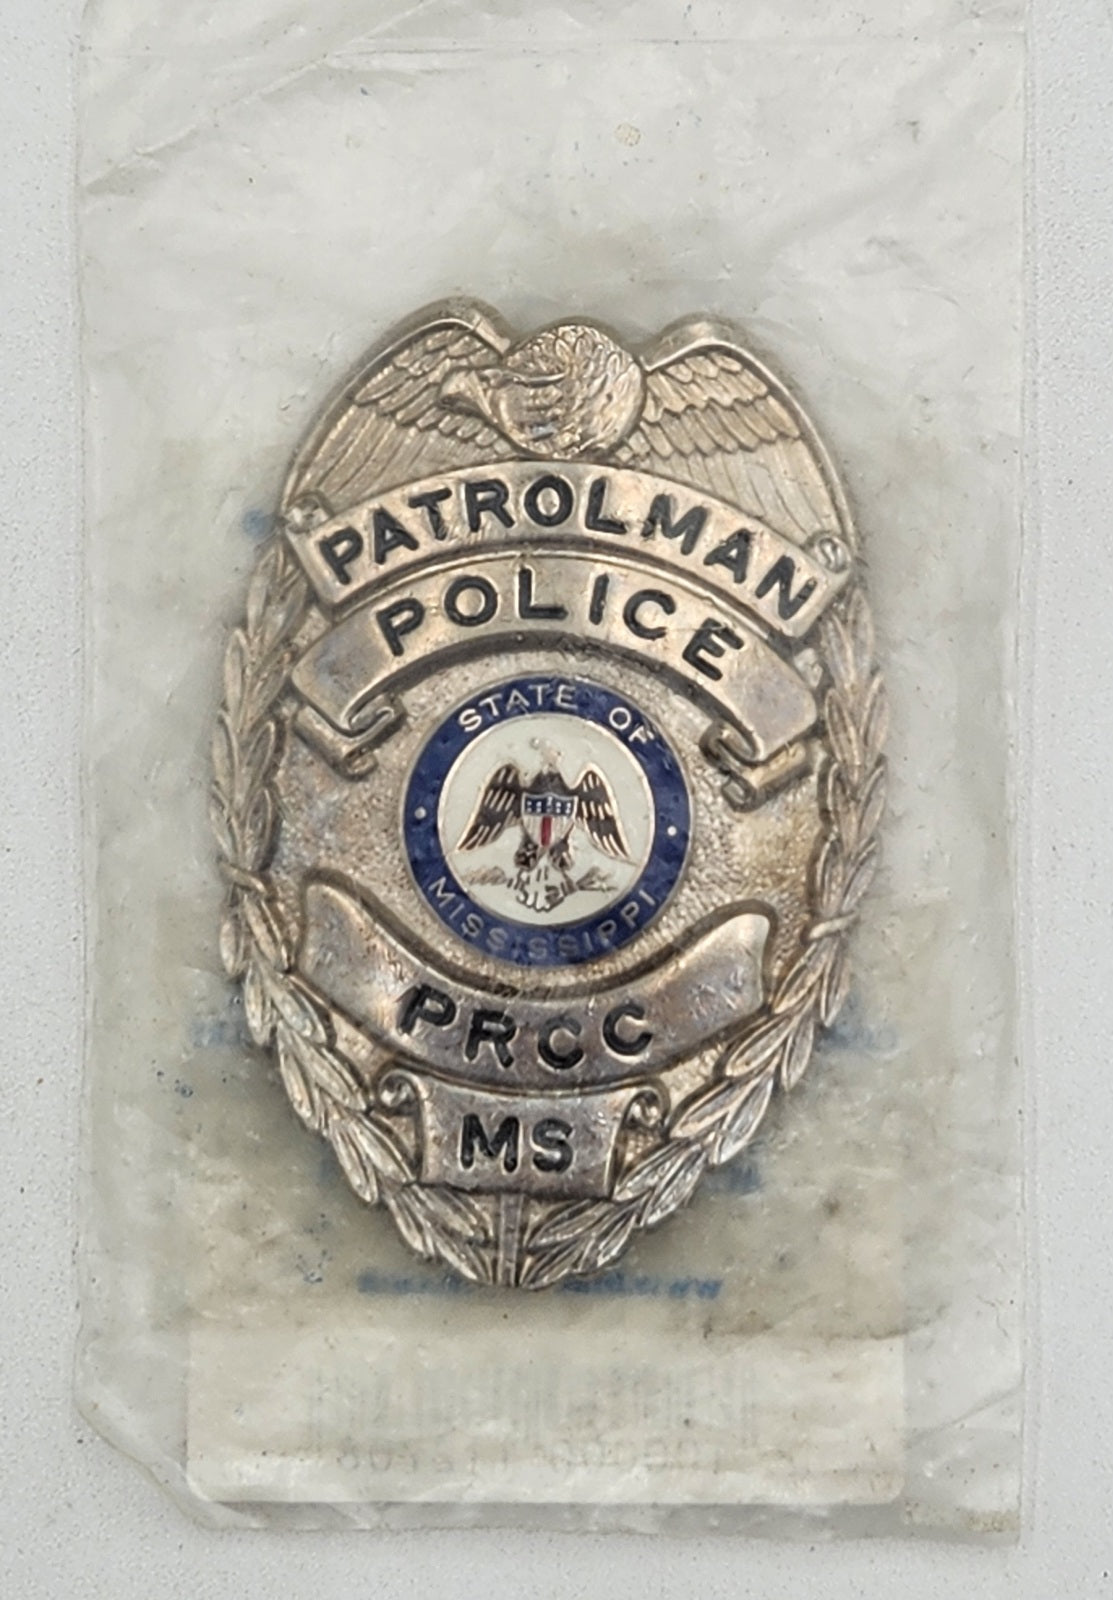 Mississippi patrolman police badge